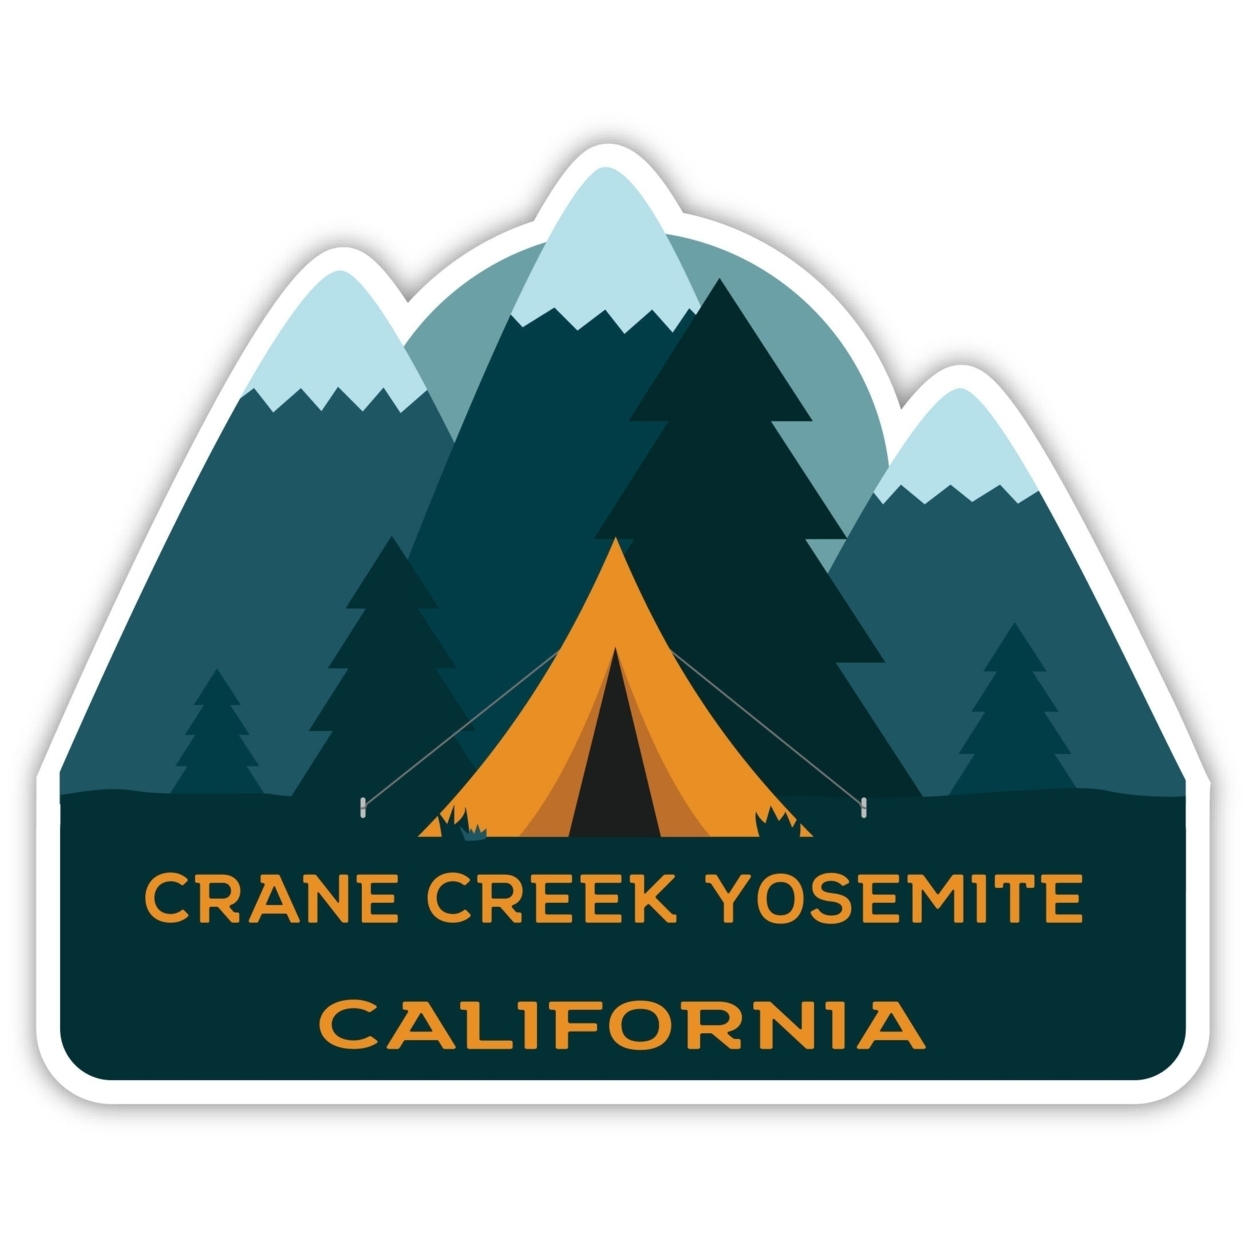 Crane Creek Yosemite California Souvenir Decorative Stickers (Choose Theme And Size) - 4-Pack, 10-Inch, Tent